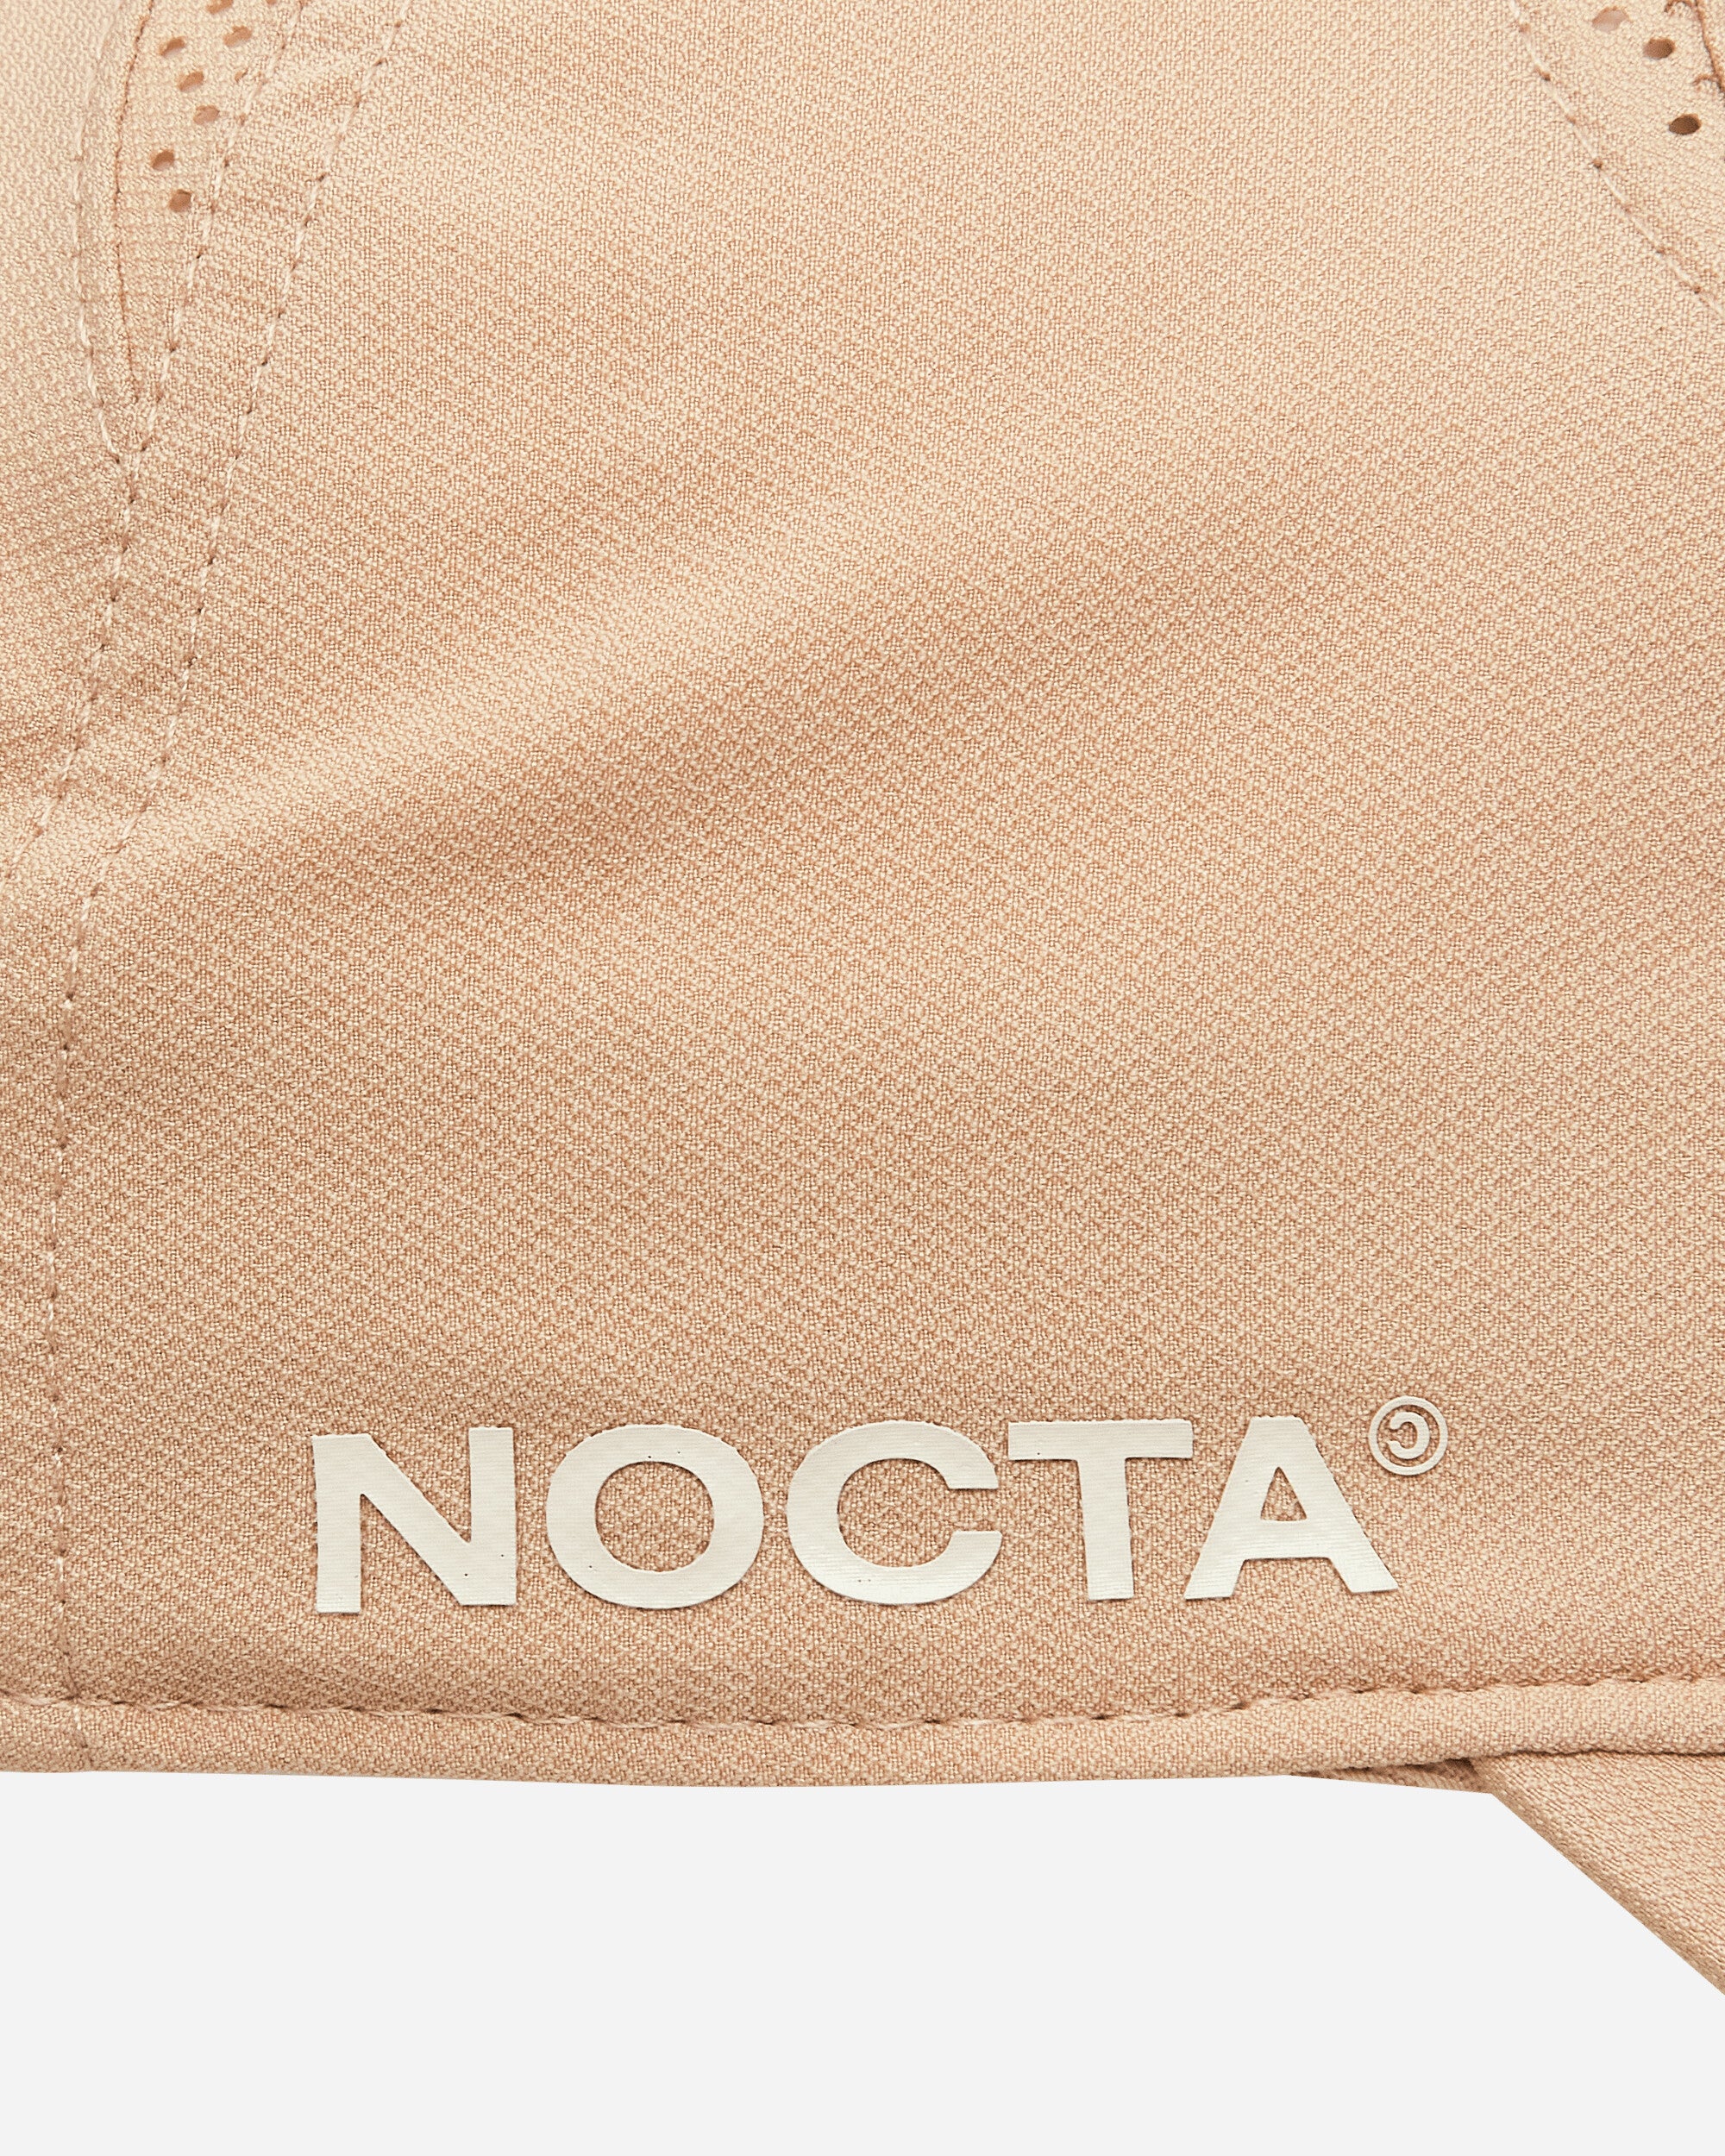 Nike U Nrg Club Cap Nocta-Uscb Hemp/Sanddrift Hats Caps FV5541-200